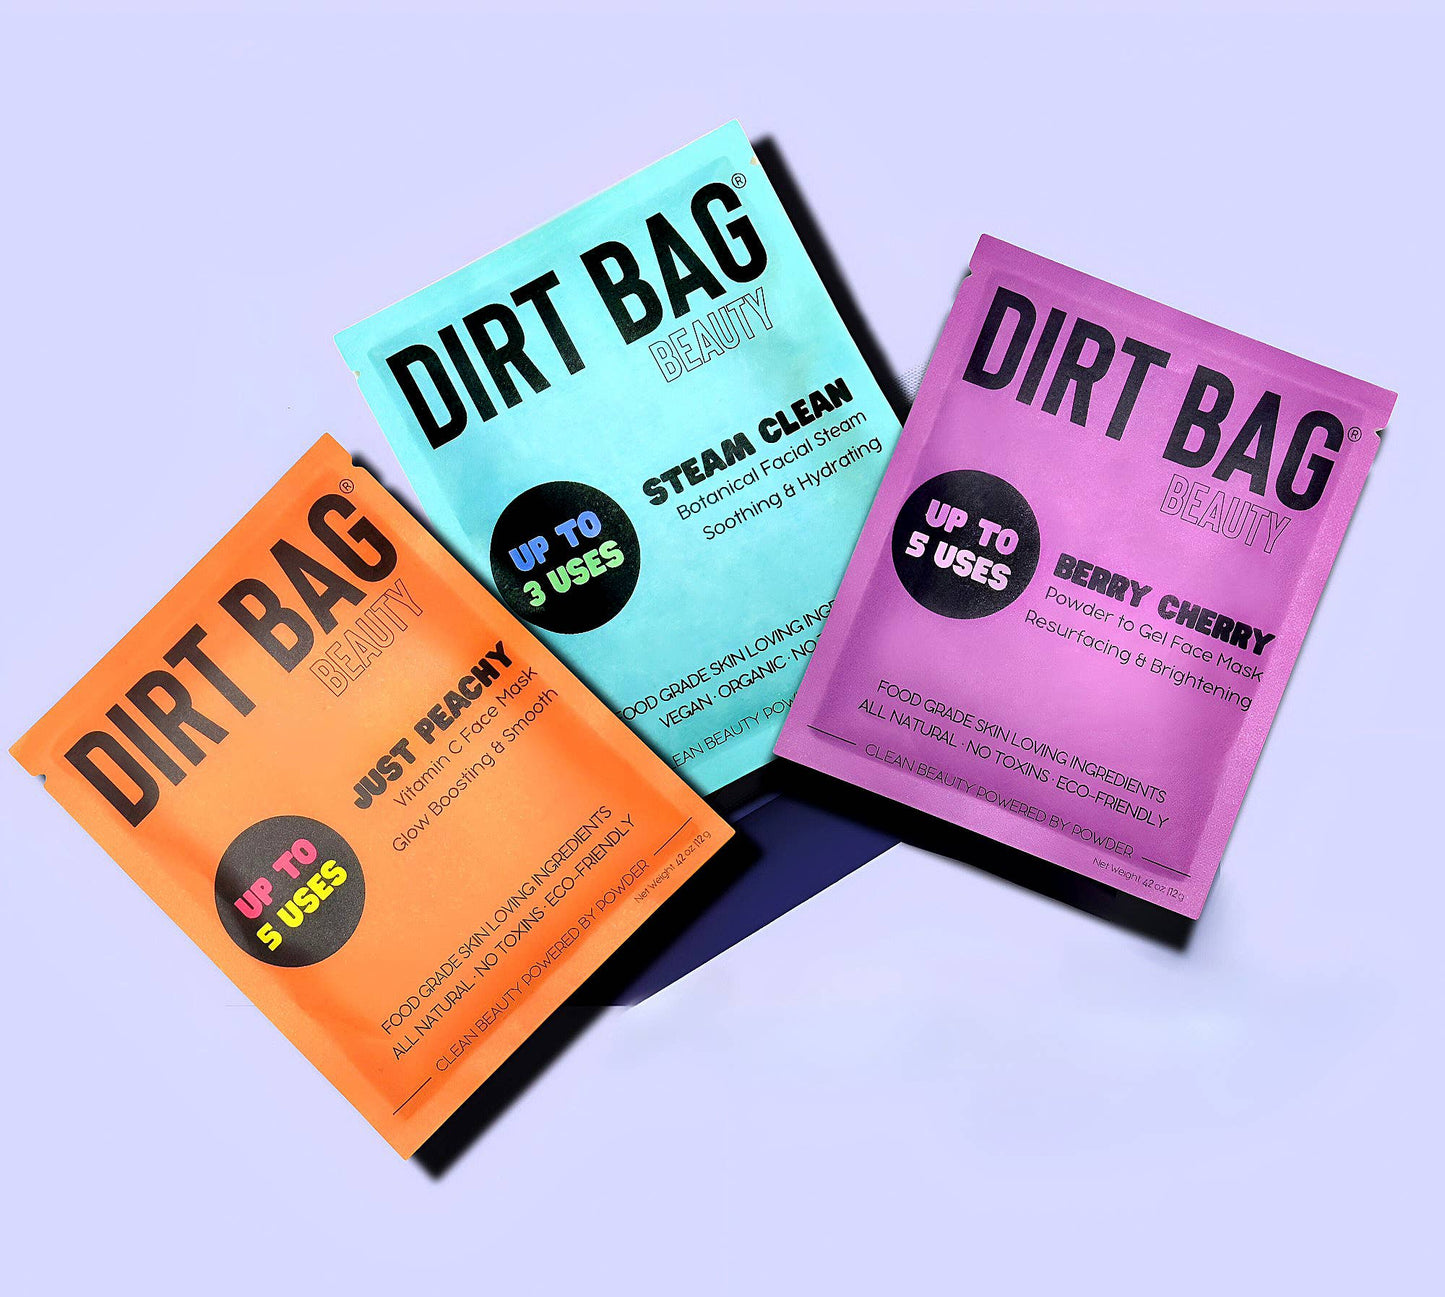 Dirt Bag® Beauty - Steam Clean -Organic Botanical Vegan Facial Steam